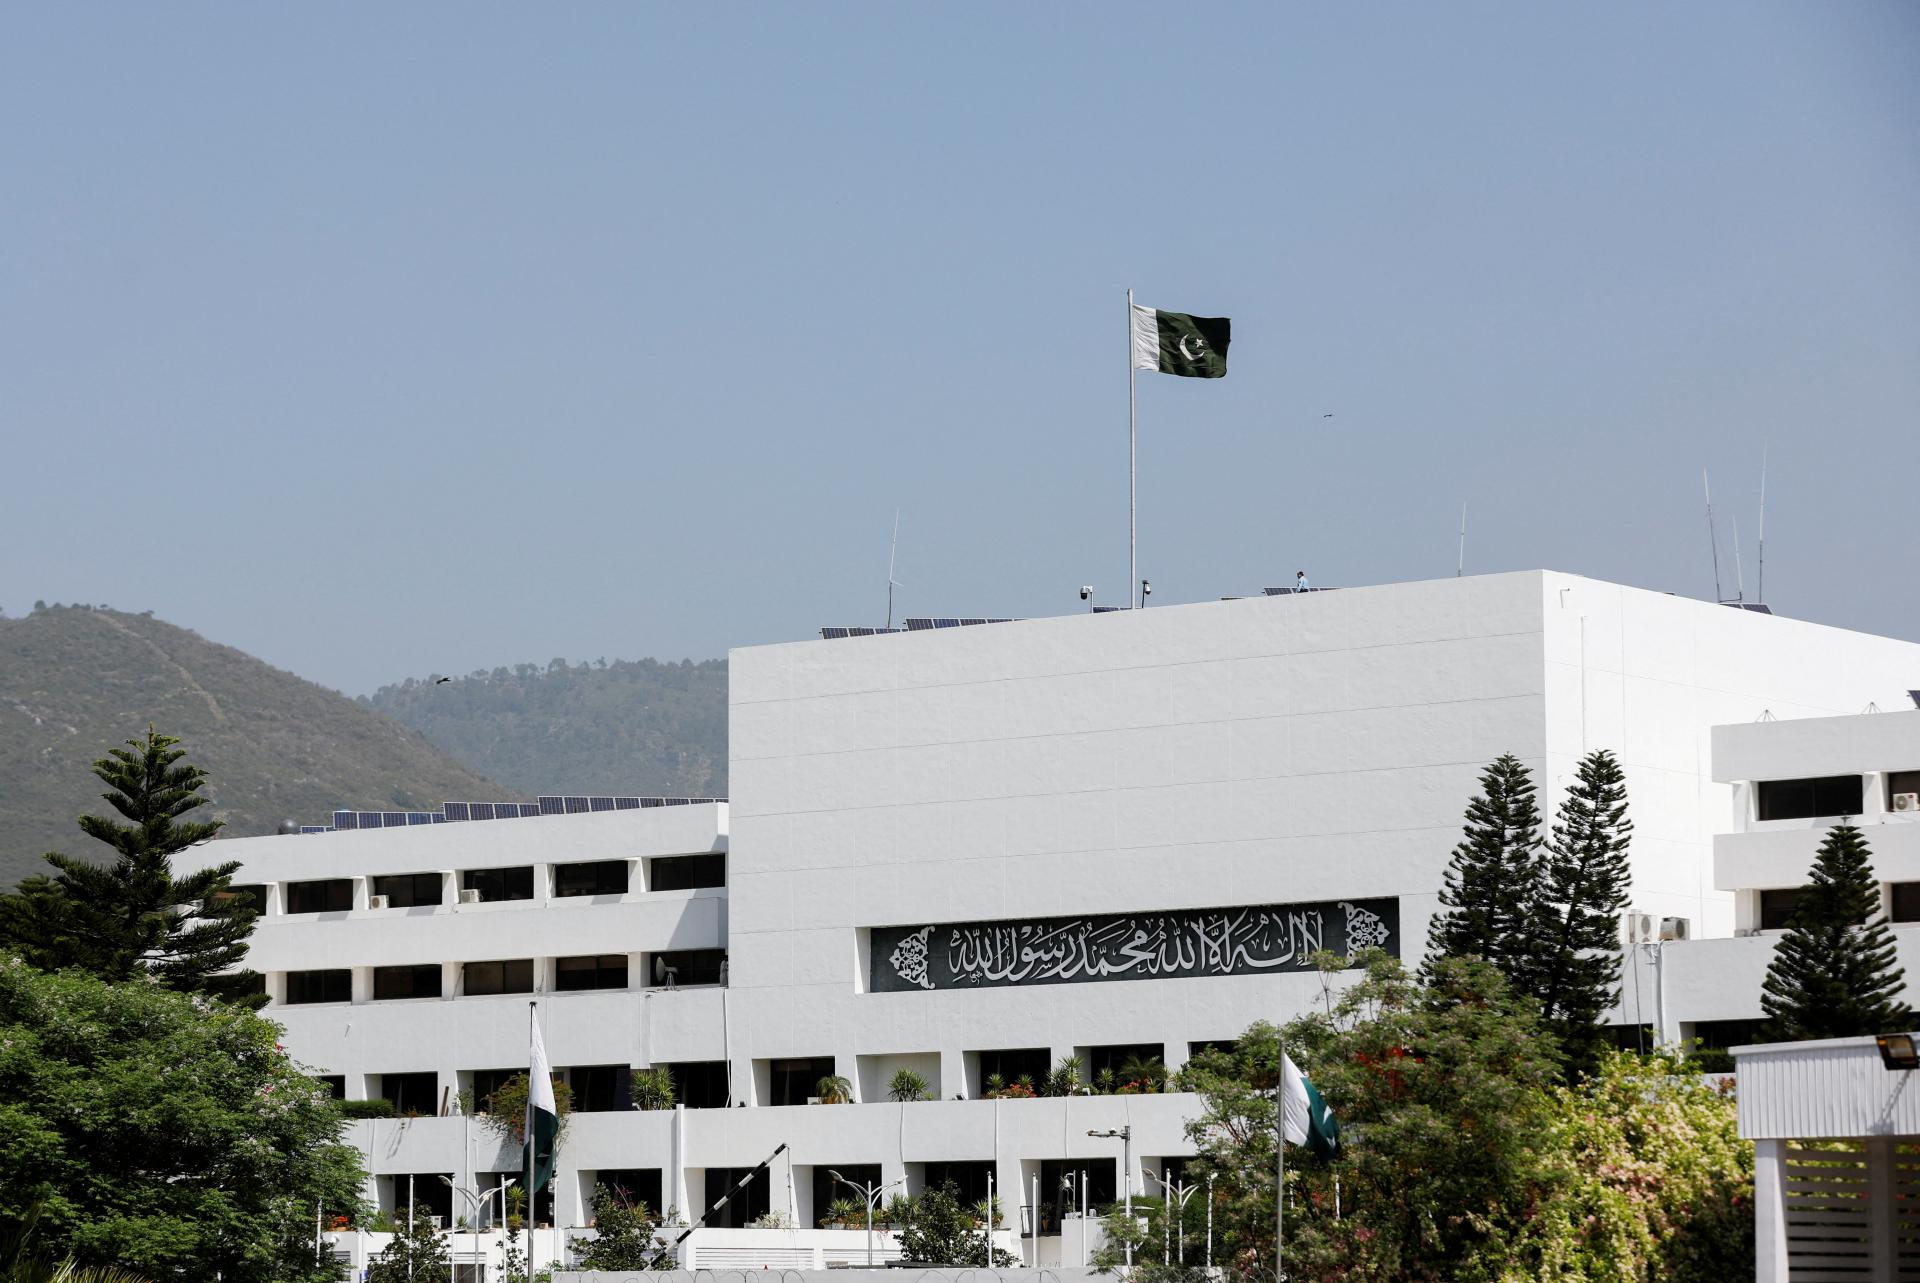 Pakistanský prezident rozpustil parlament, aby sa krajina pripravila na voľby. Bývalý premiér je vo väzení